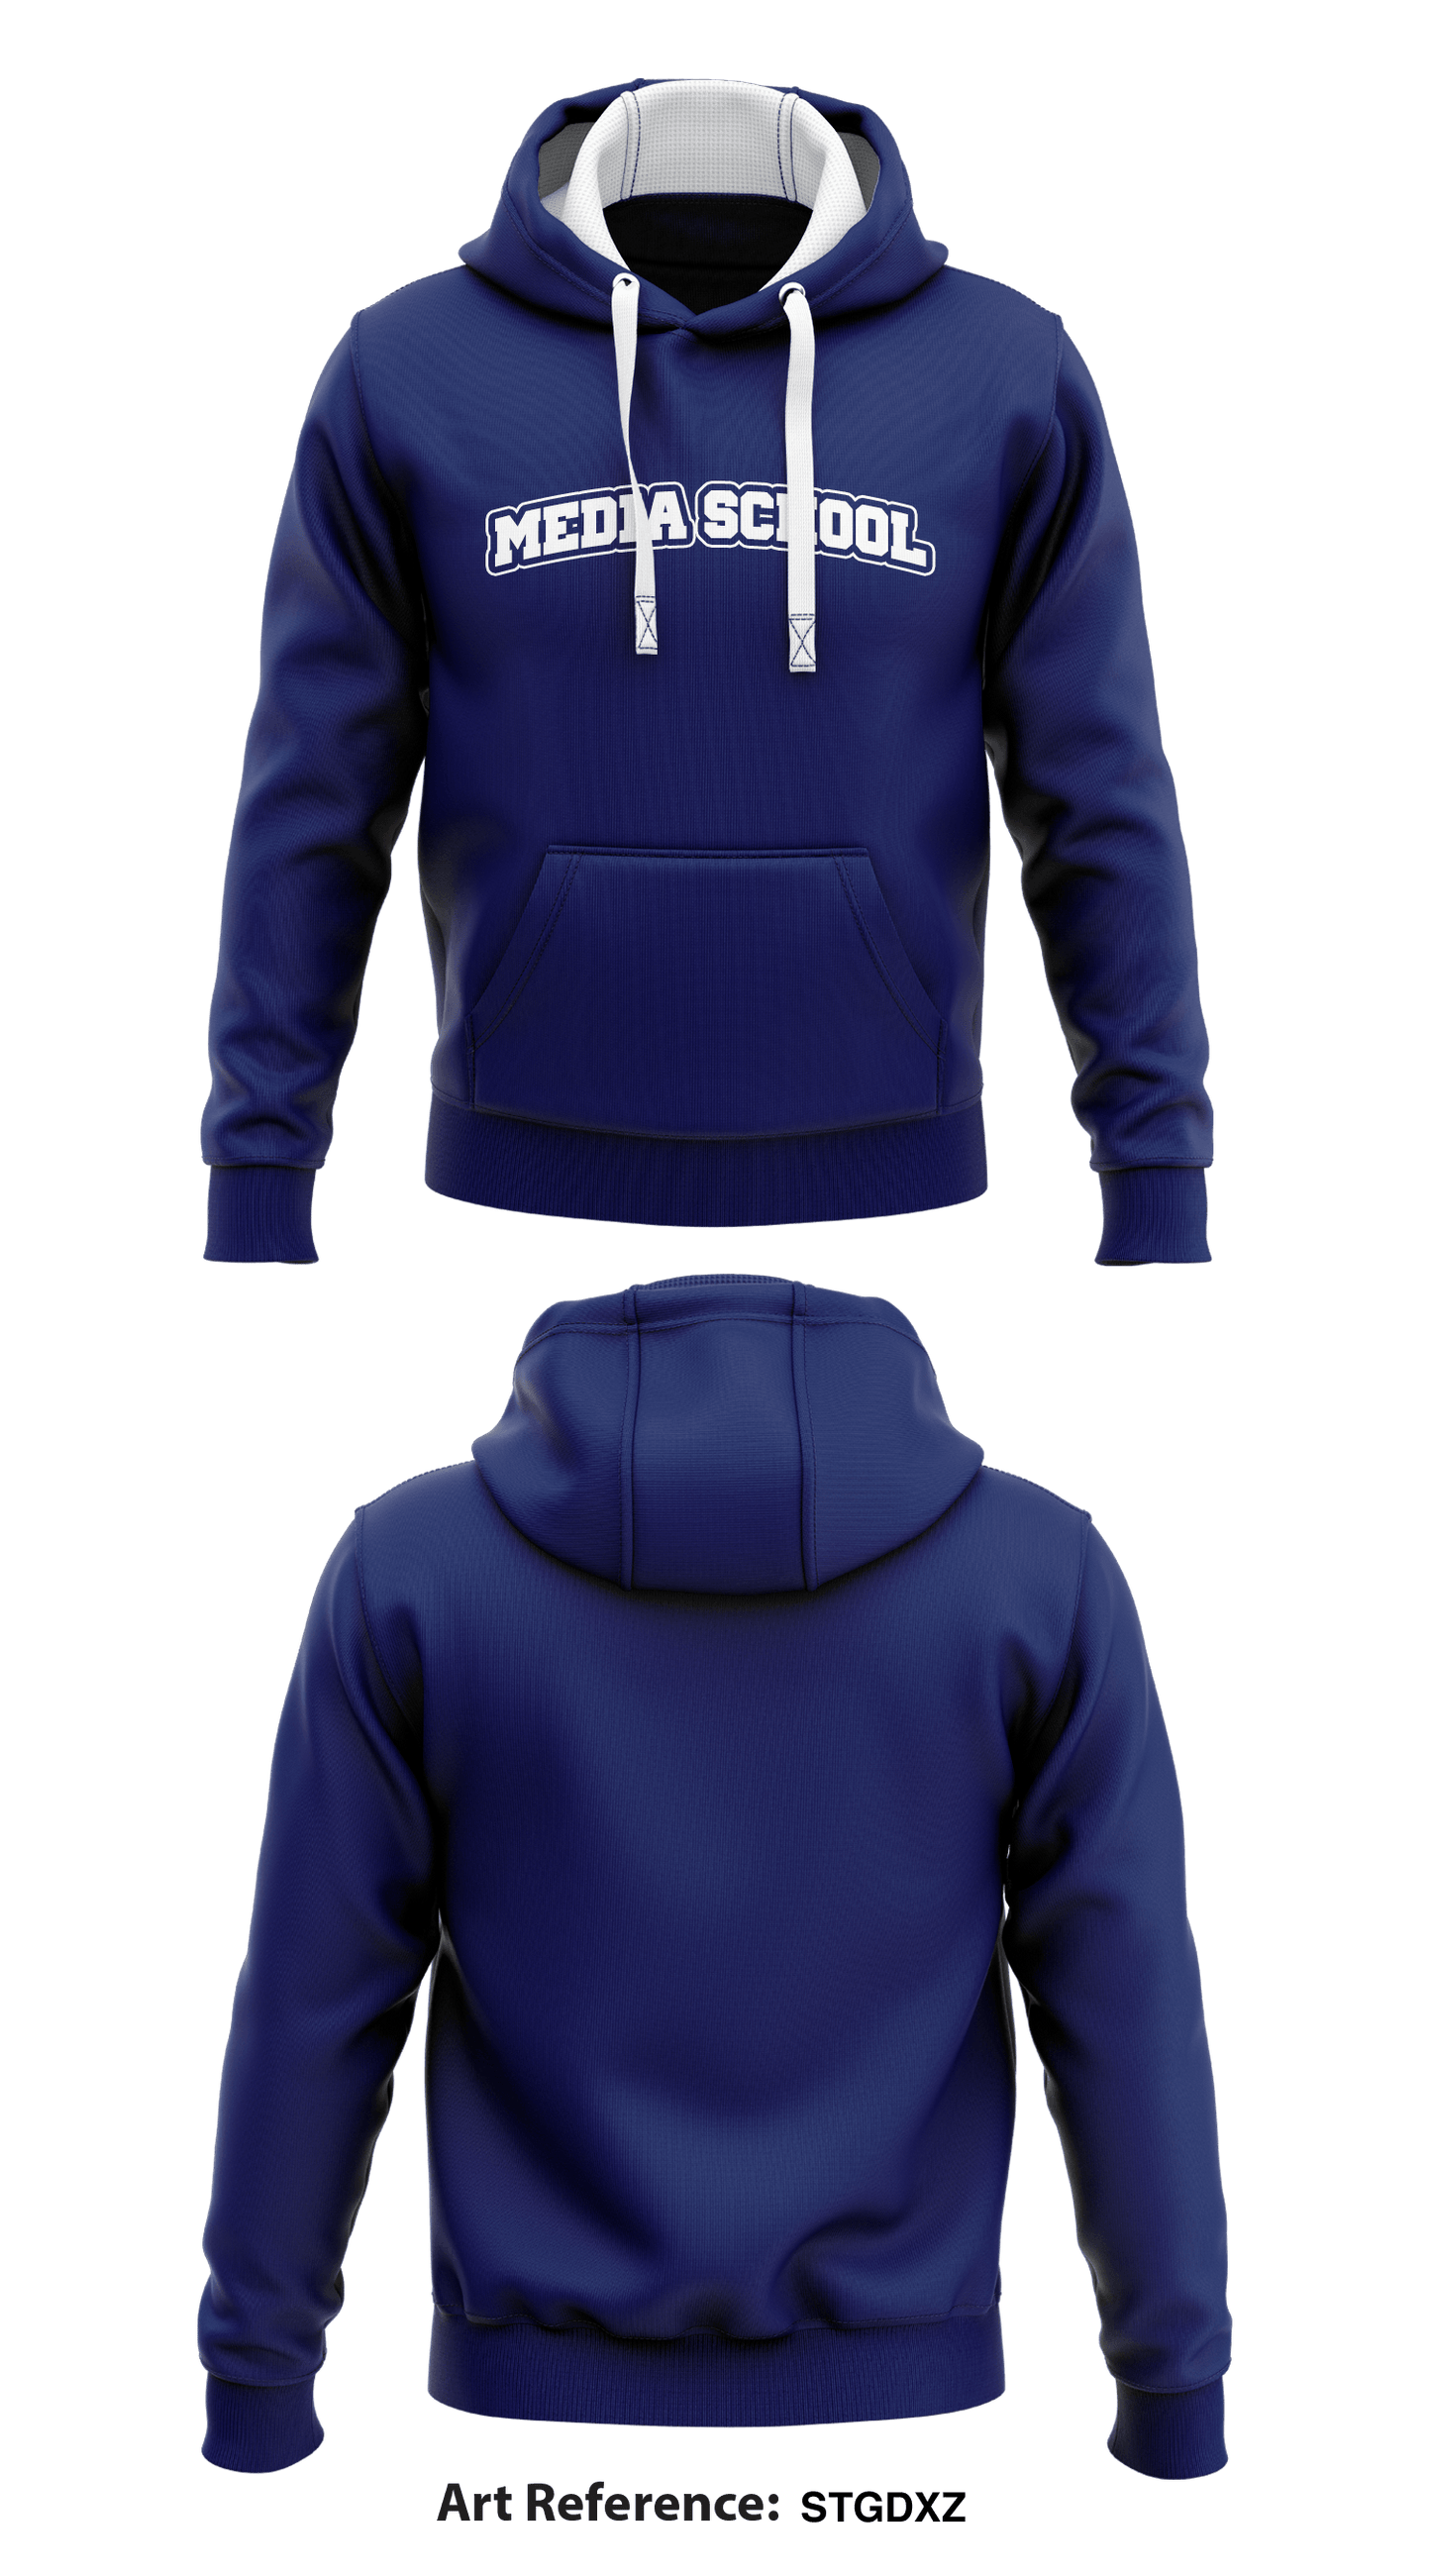 Media School Store 1  Core Men's Hooded Performance Sweatshirt - STGDxz